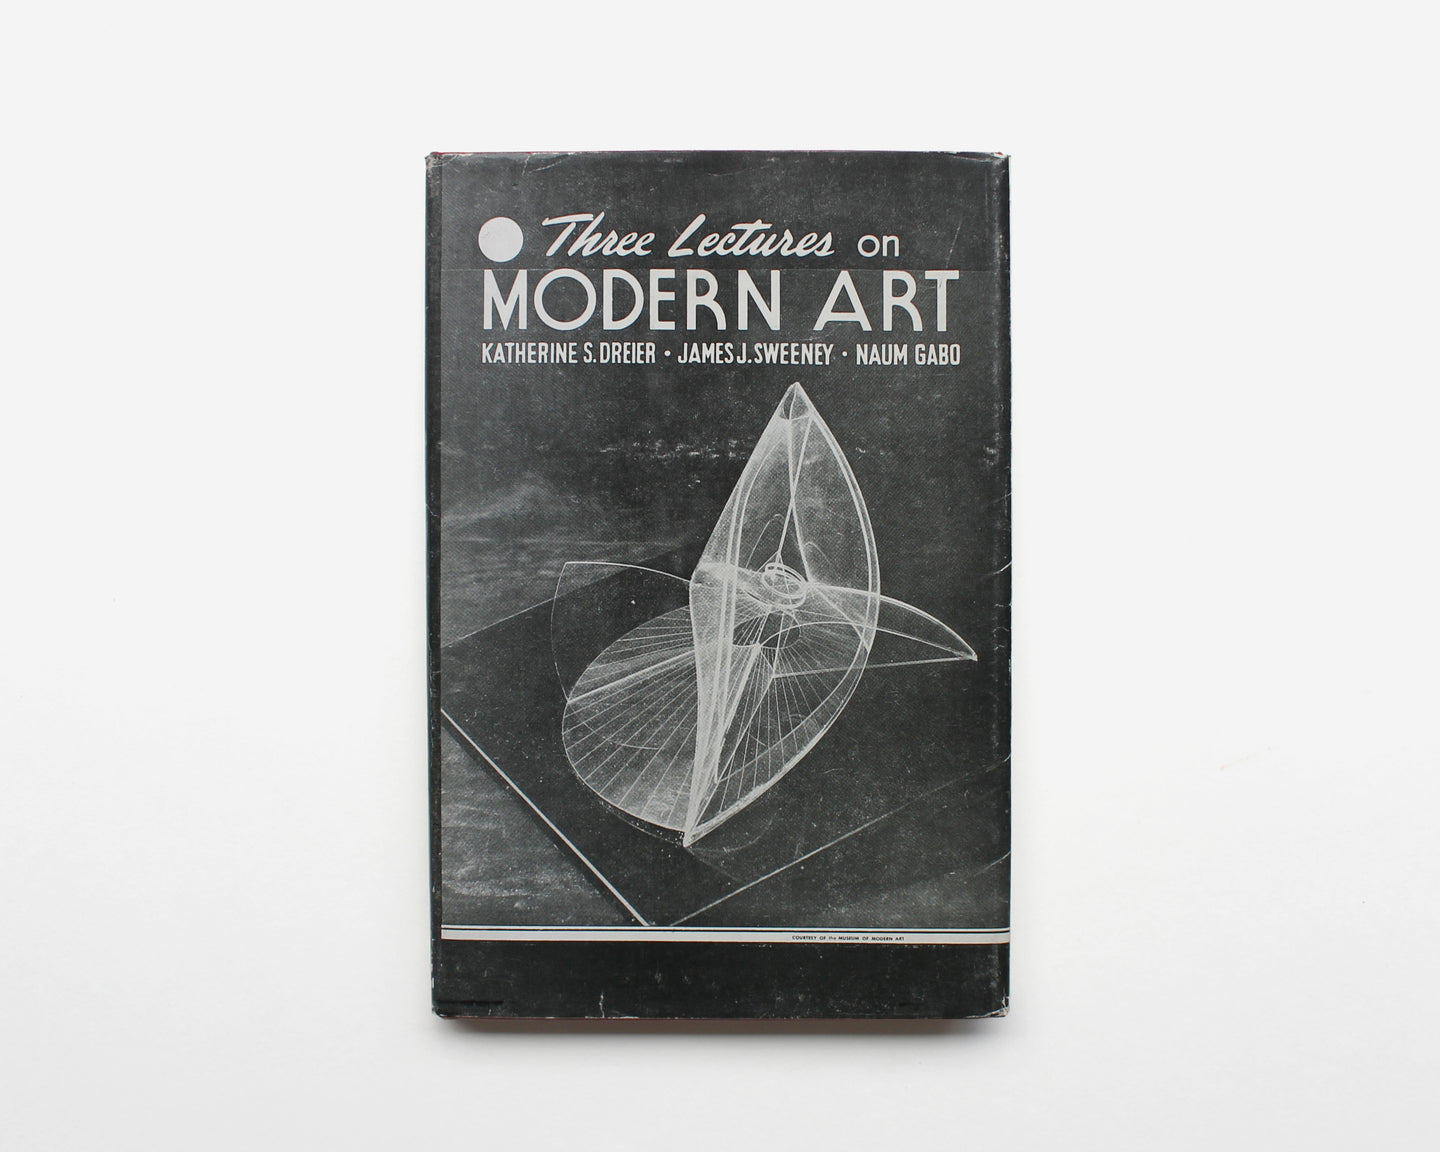 Three Lectures on Modern Art [Katherine S. Dreier, James Johnson Sweeney and Naum Gabo]